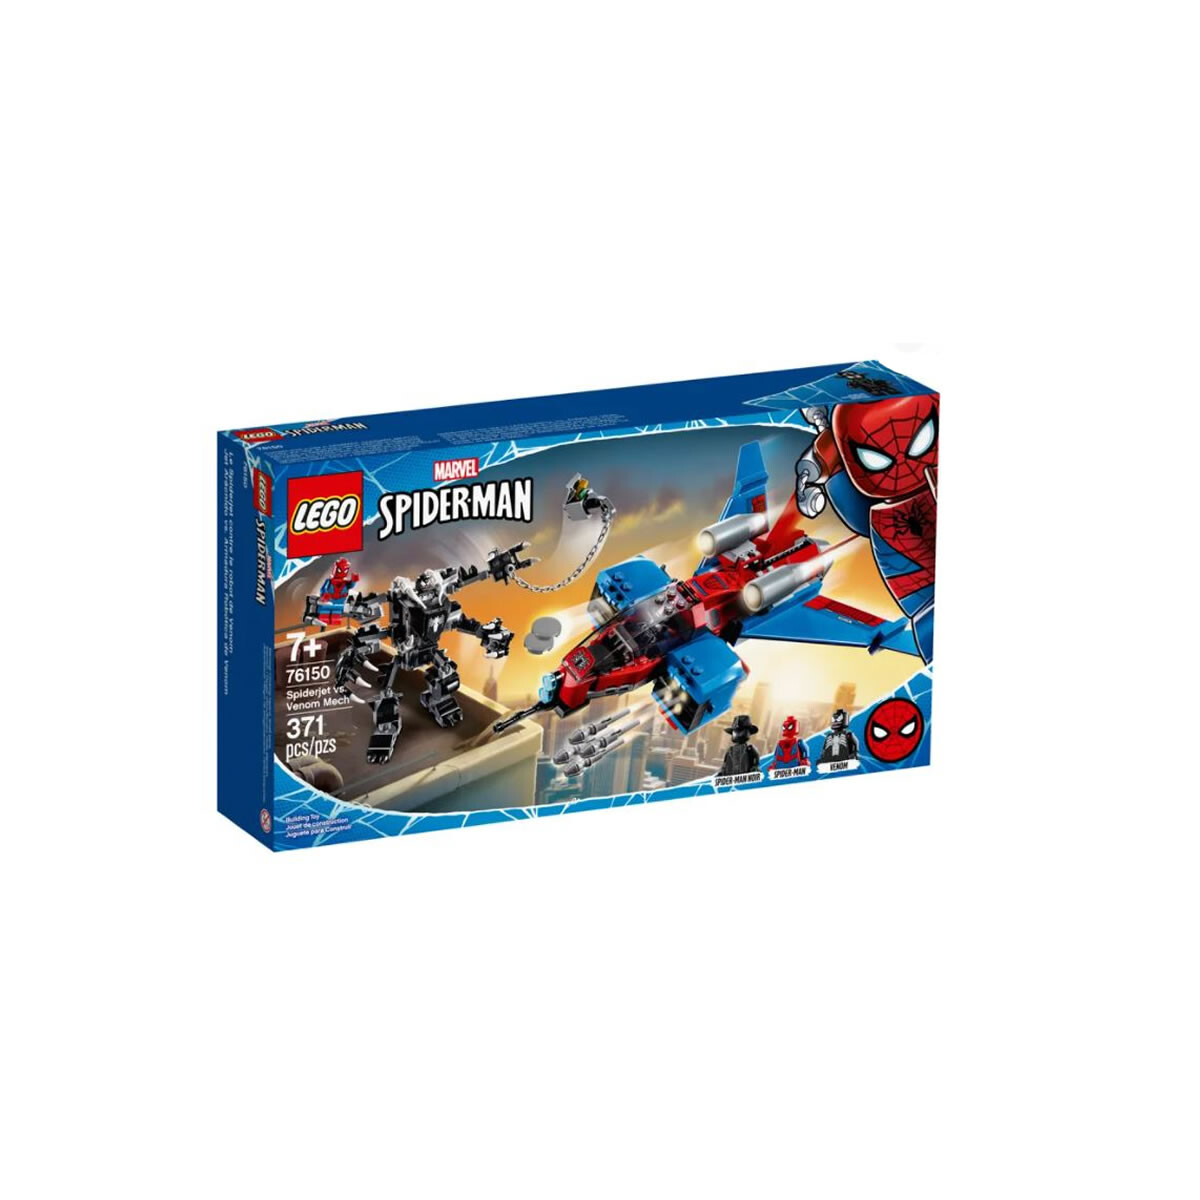 LEGO SPIDERMAN Spiderjet vs. Venom Mech 76150 